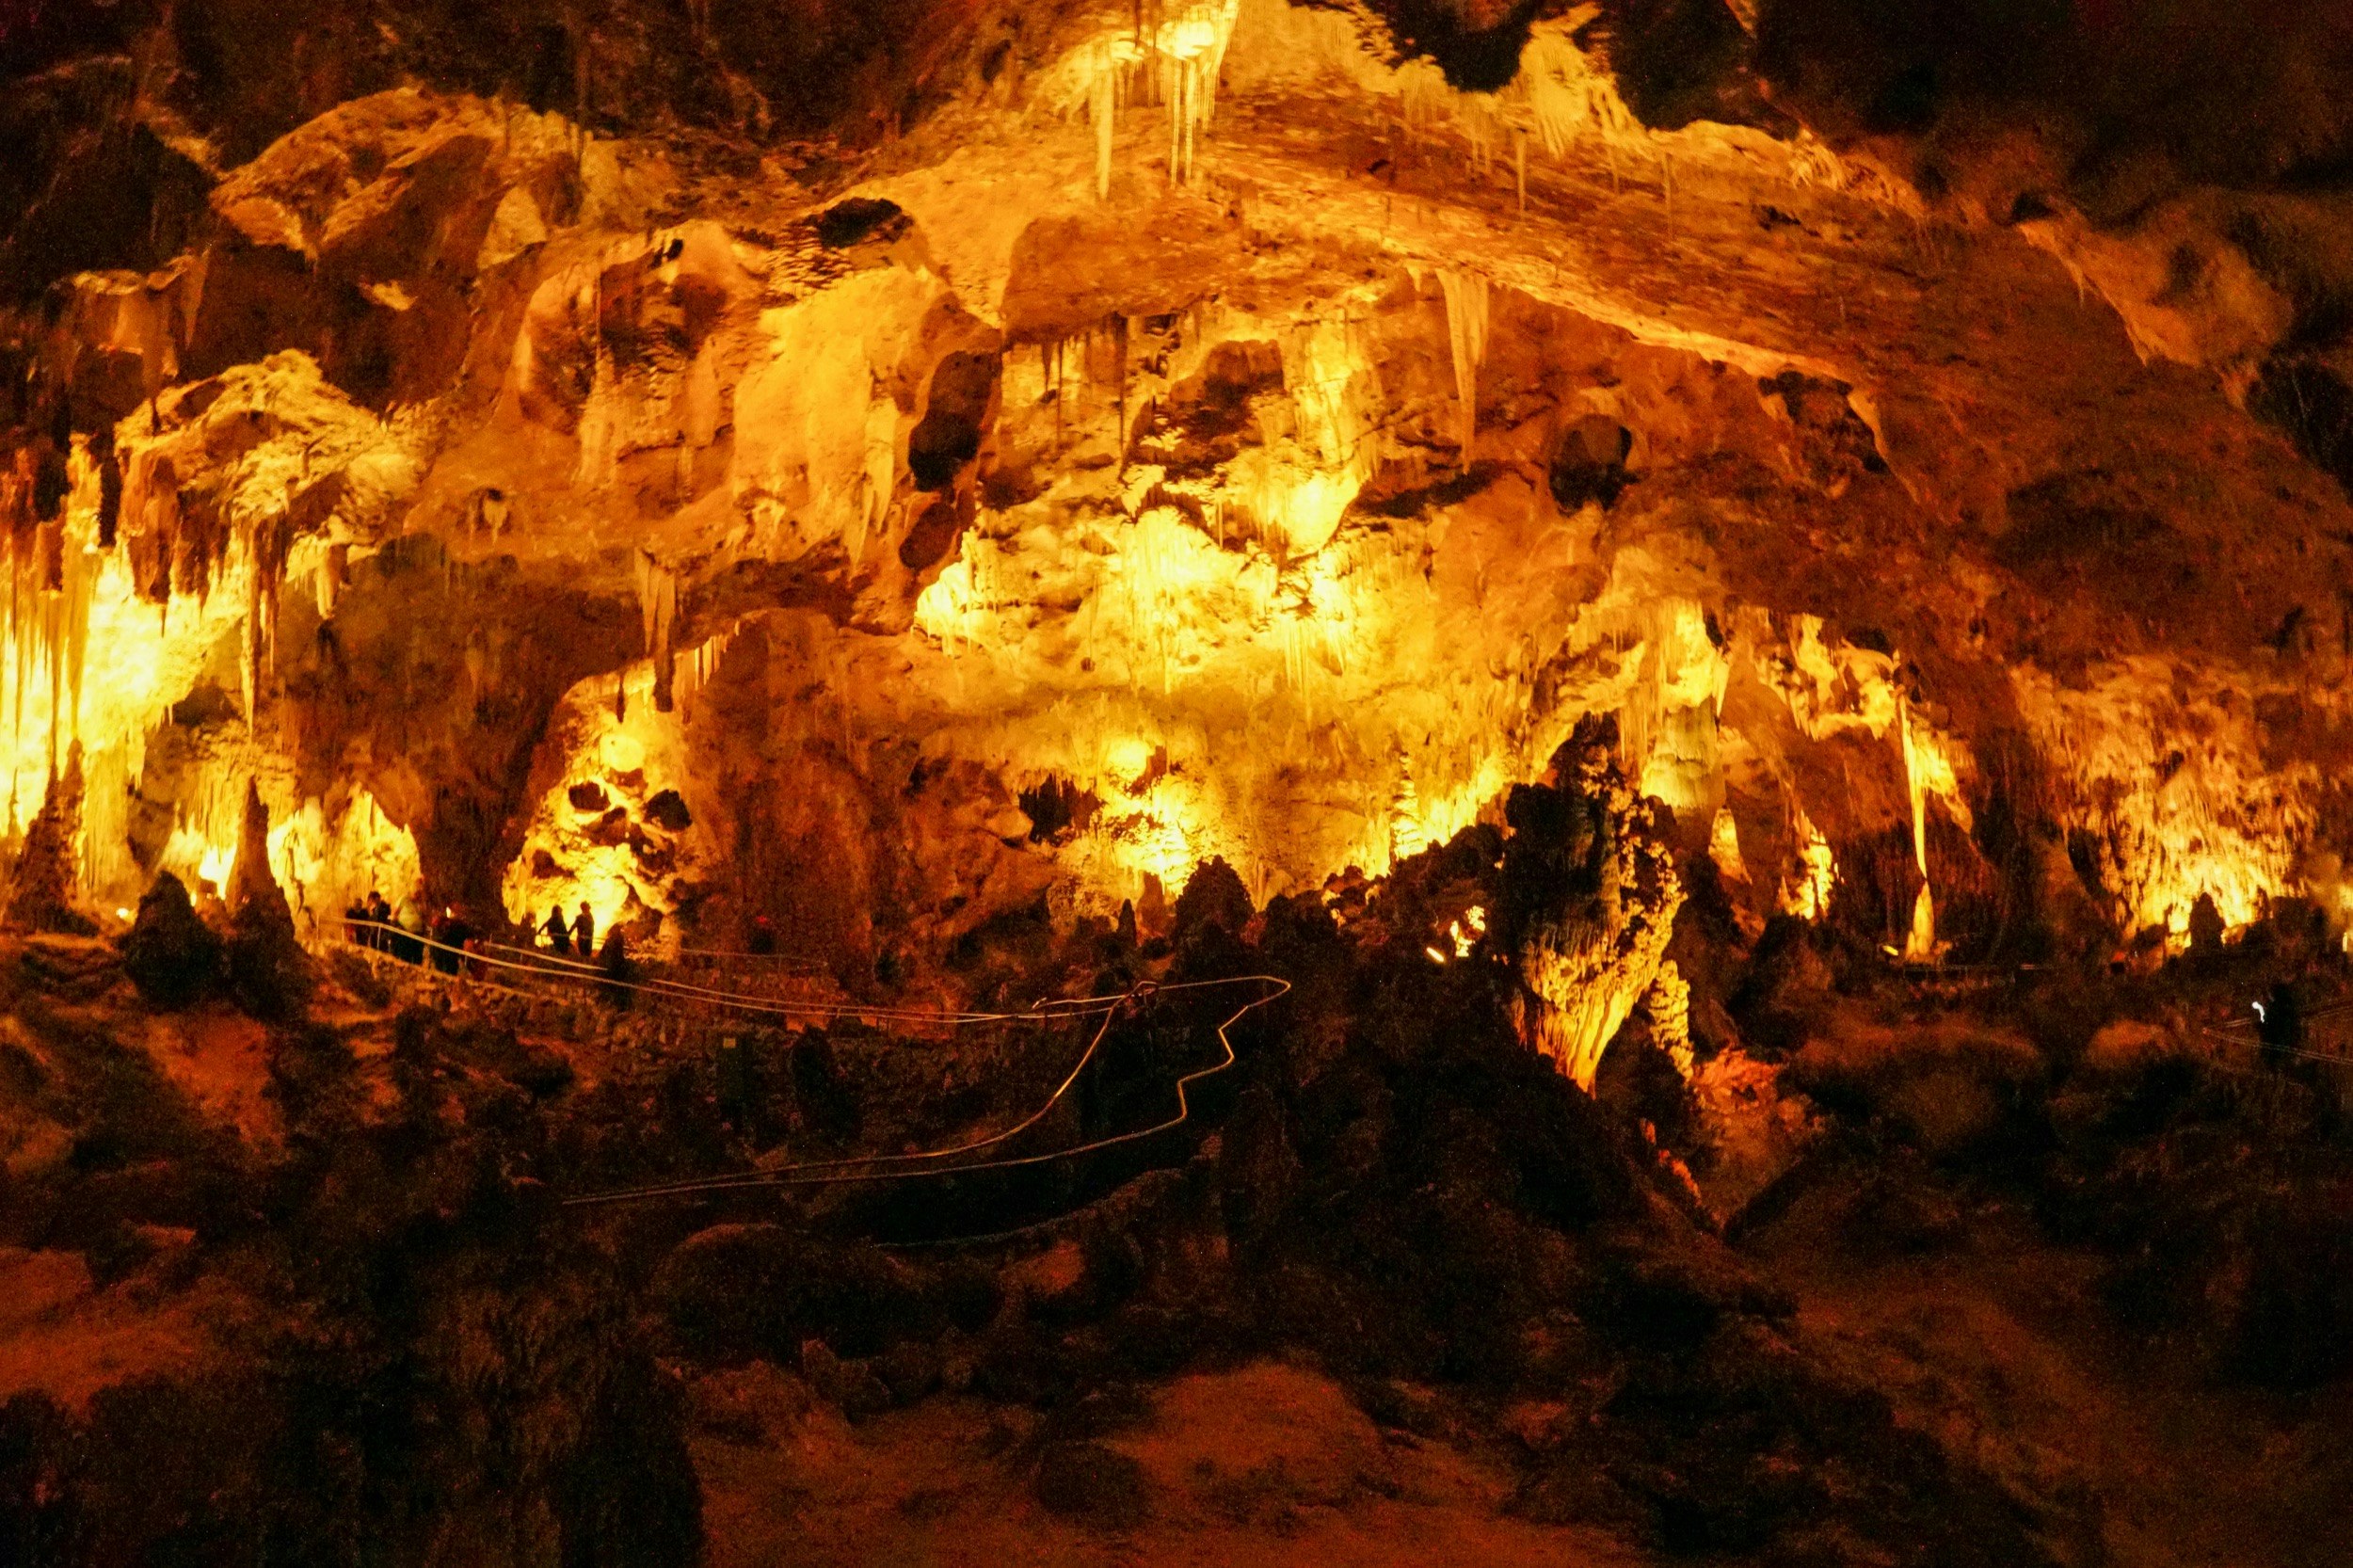 Orange lights illuminate the interior of a cave system